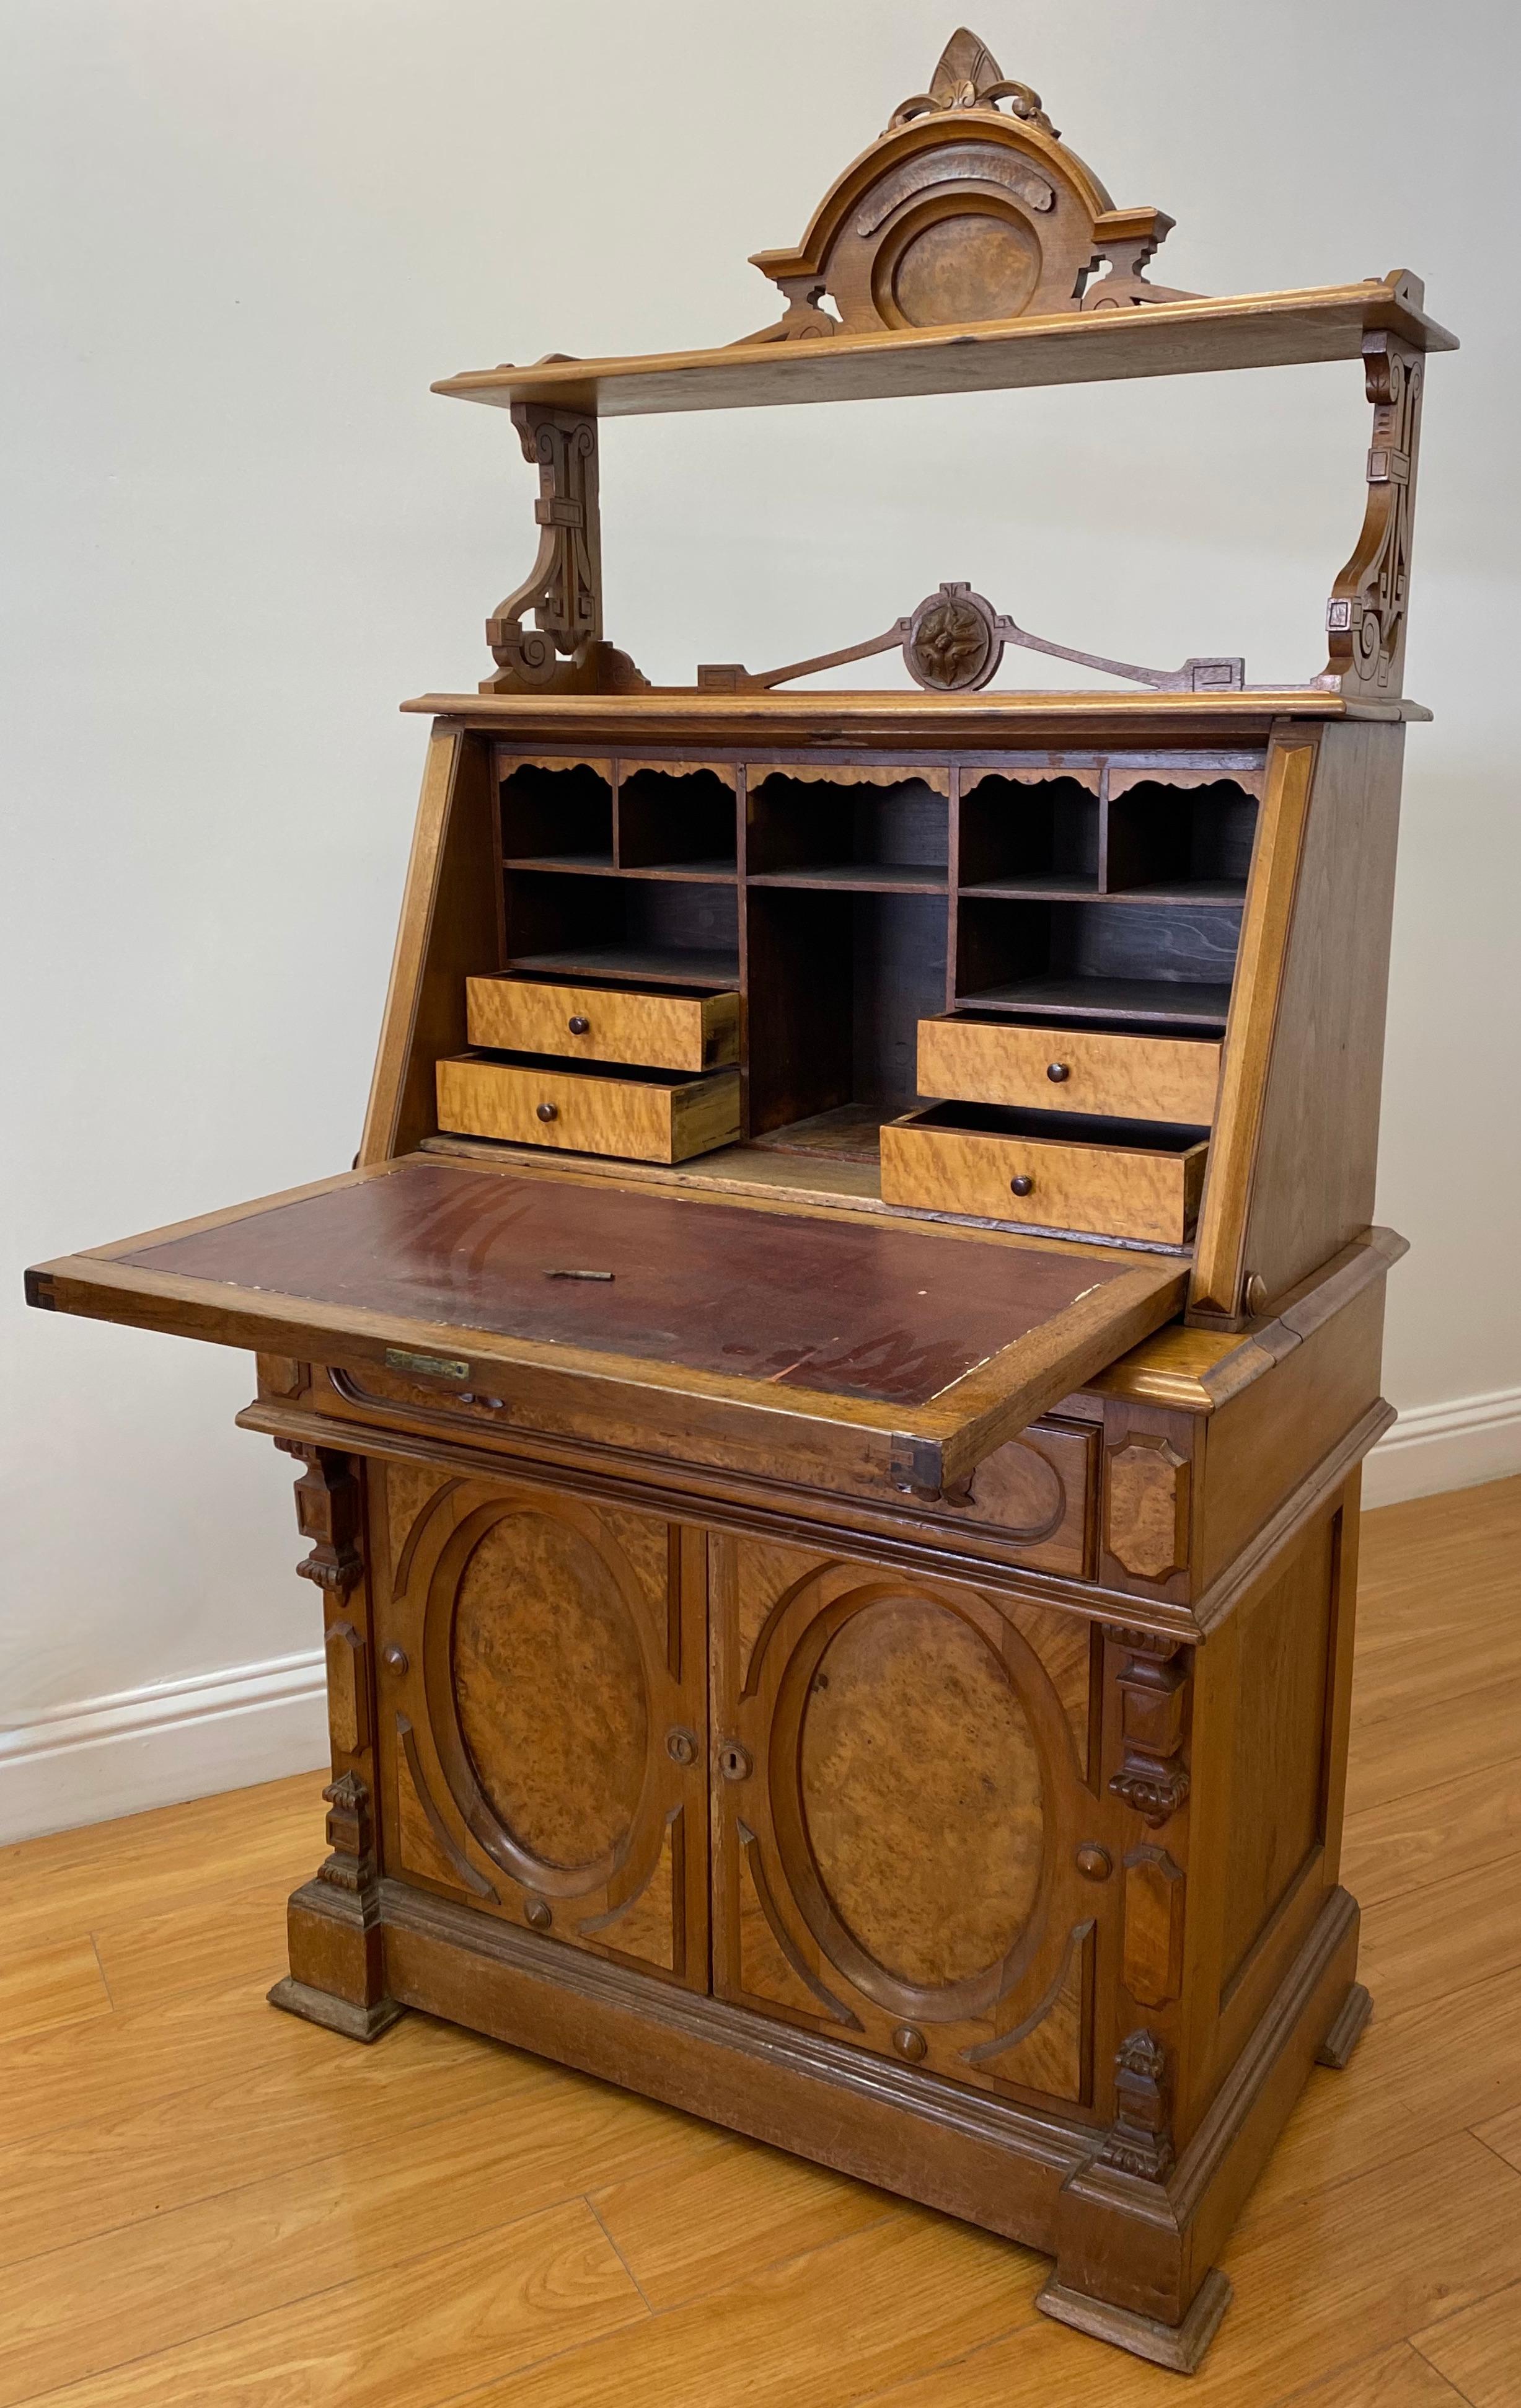 19th century burl walnut drop front bureau, C.1890

Handsome drop front desk with fitted interior

Measures: 34.75